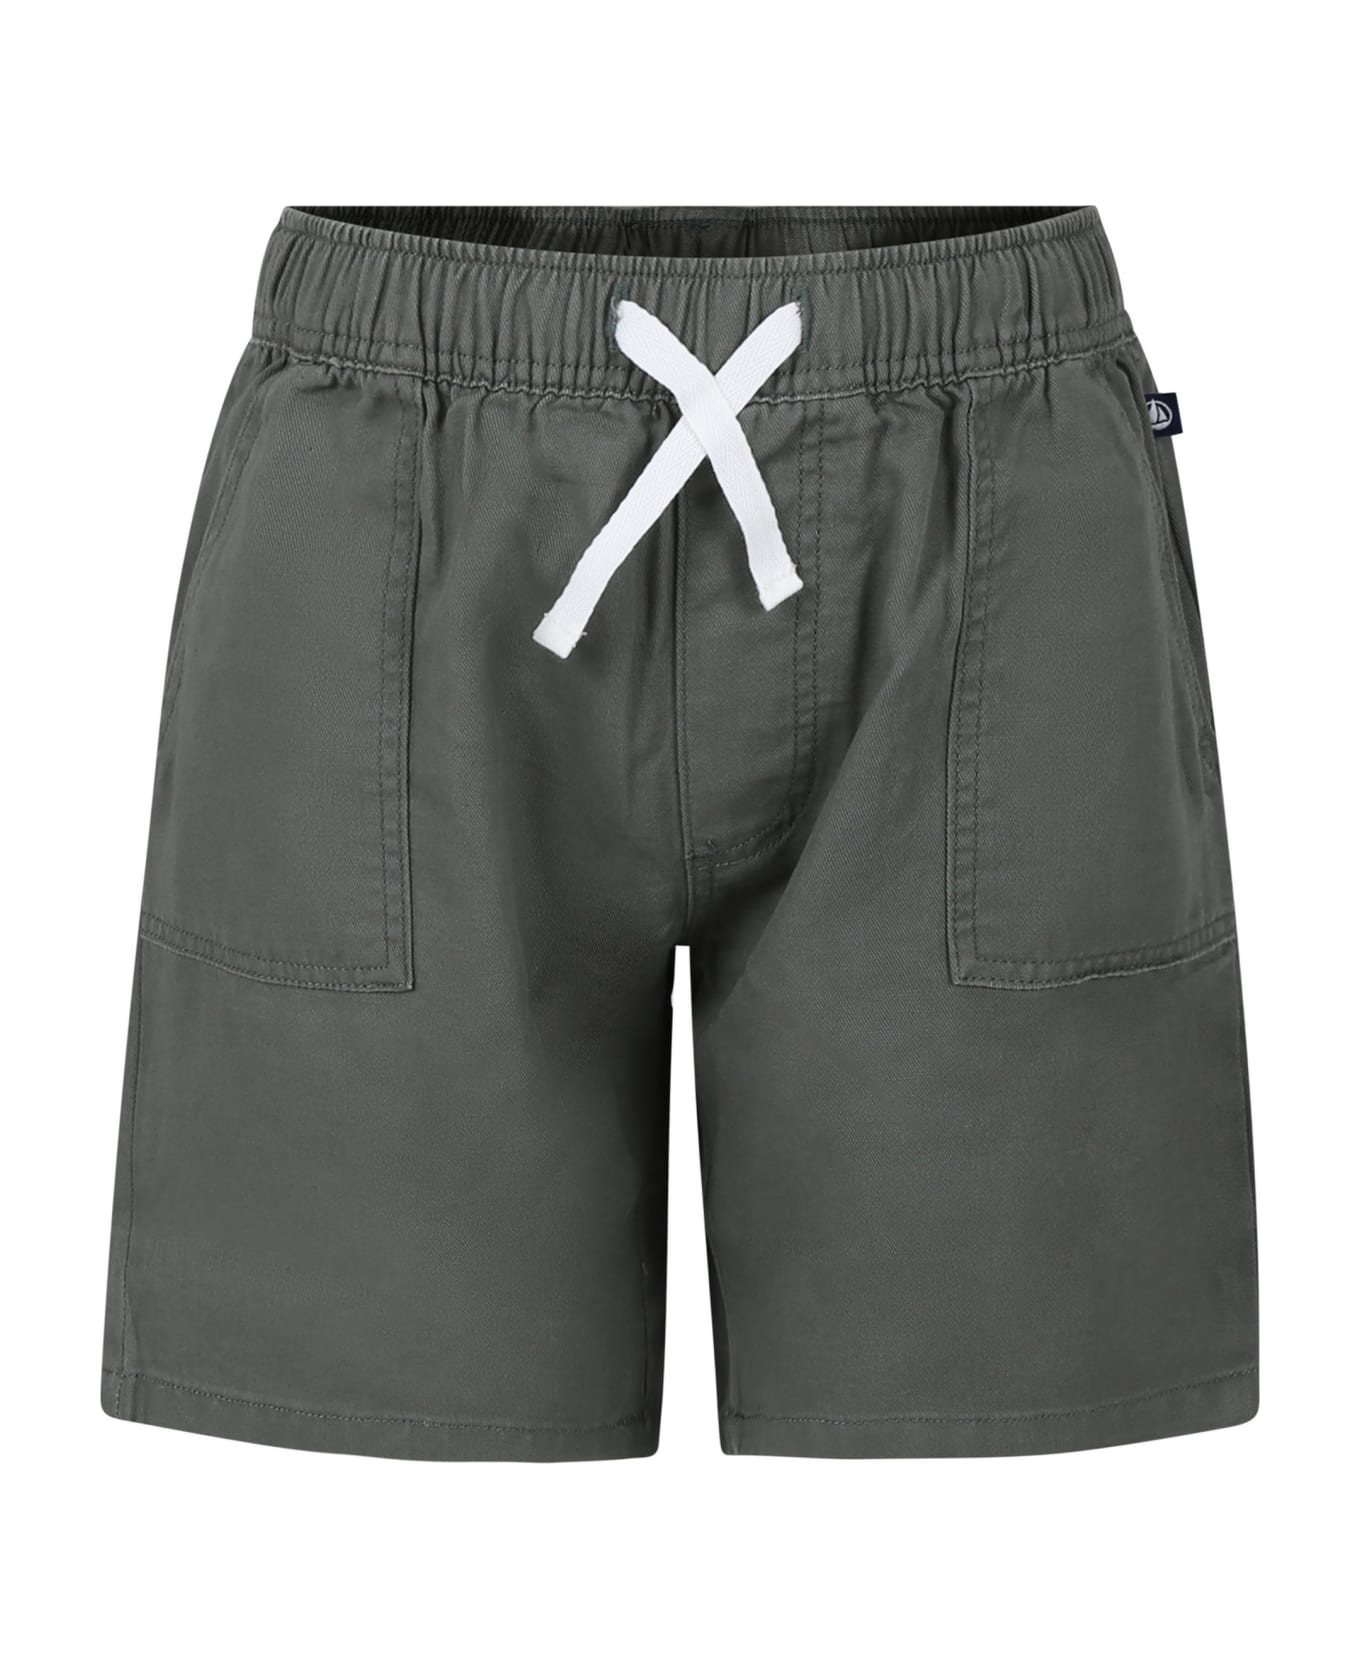 Petit Bateau Green Shorts For Boy - Green ボトムス